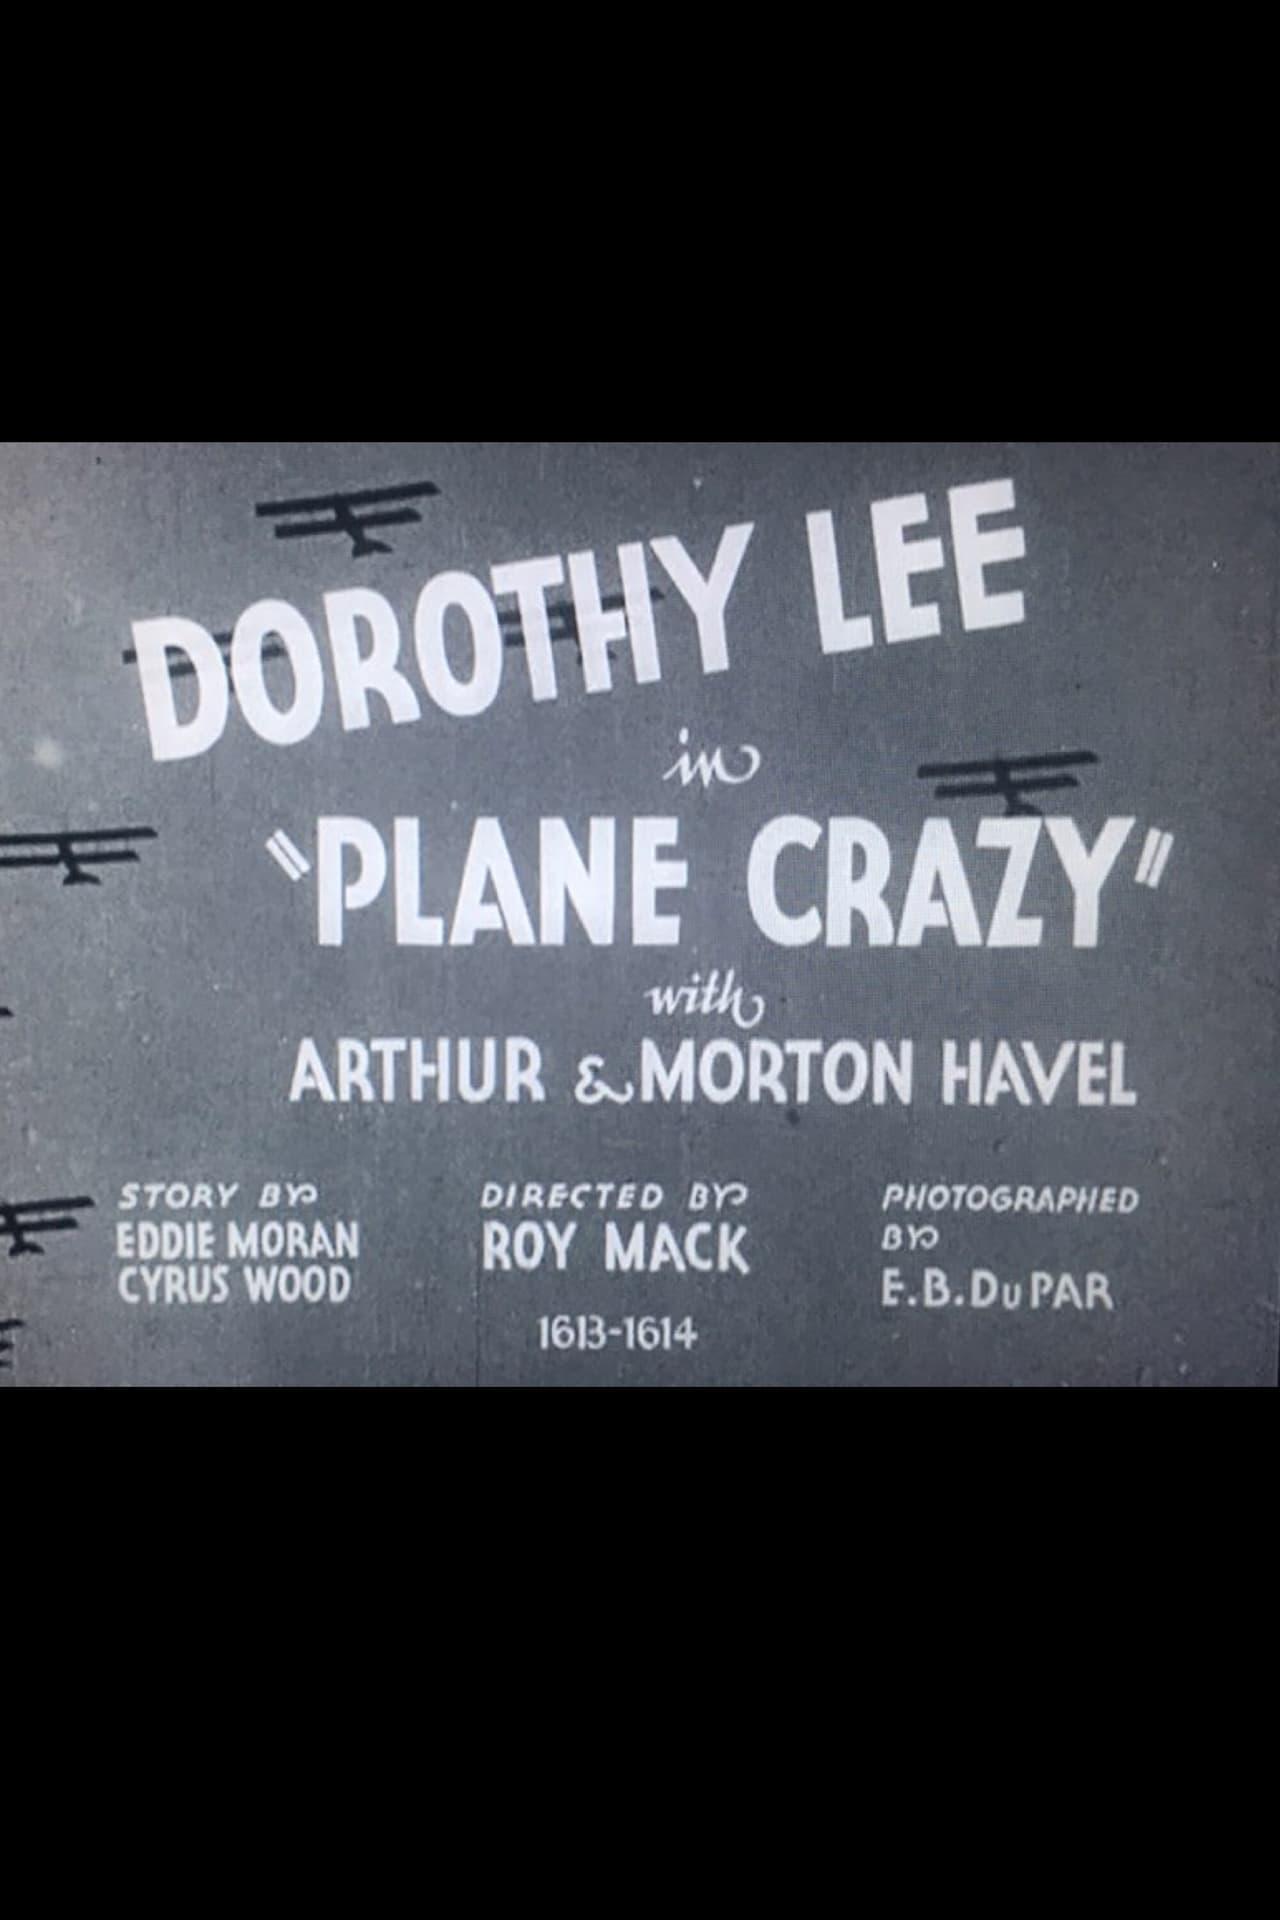 Plane Crazy poster